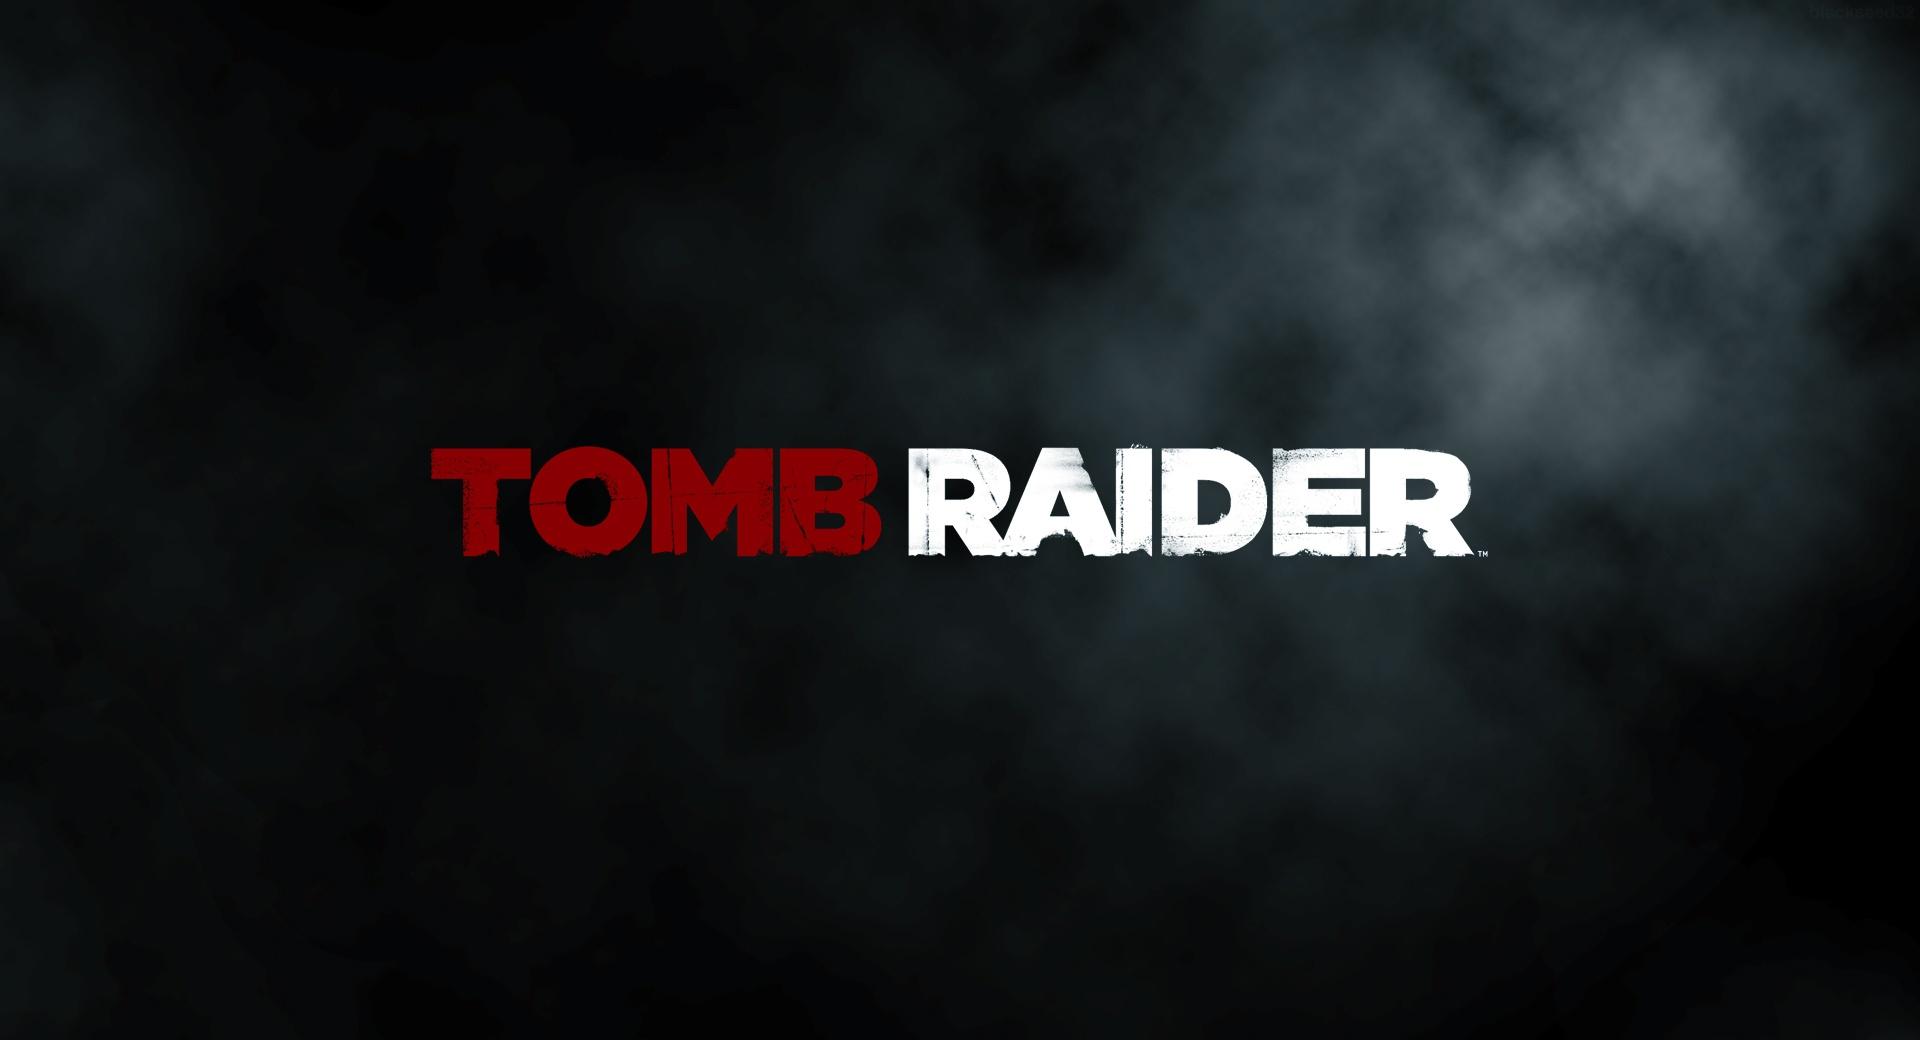 Tomb Raider 2013 Dark Poster at 1024 x 1024 iPad size wallpapers HD quality